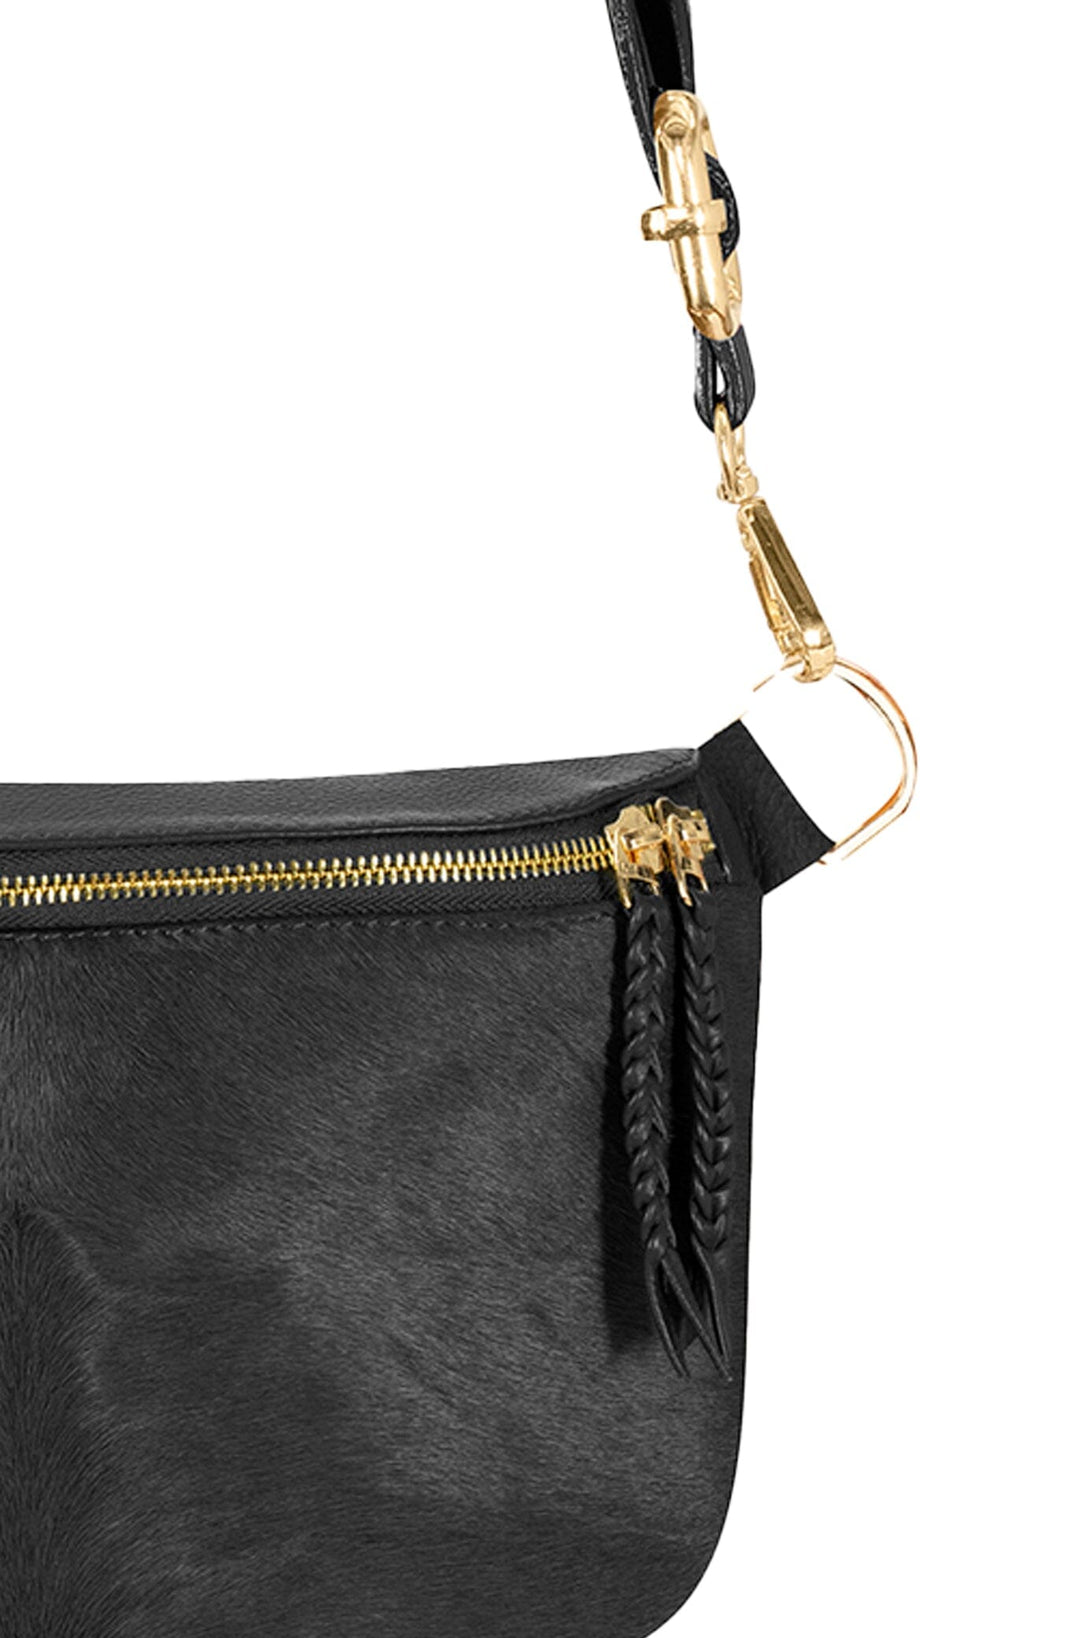 Ramona Leather Handbag Black Cowhide Leather